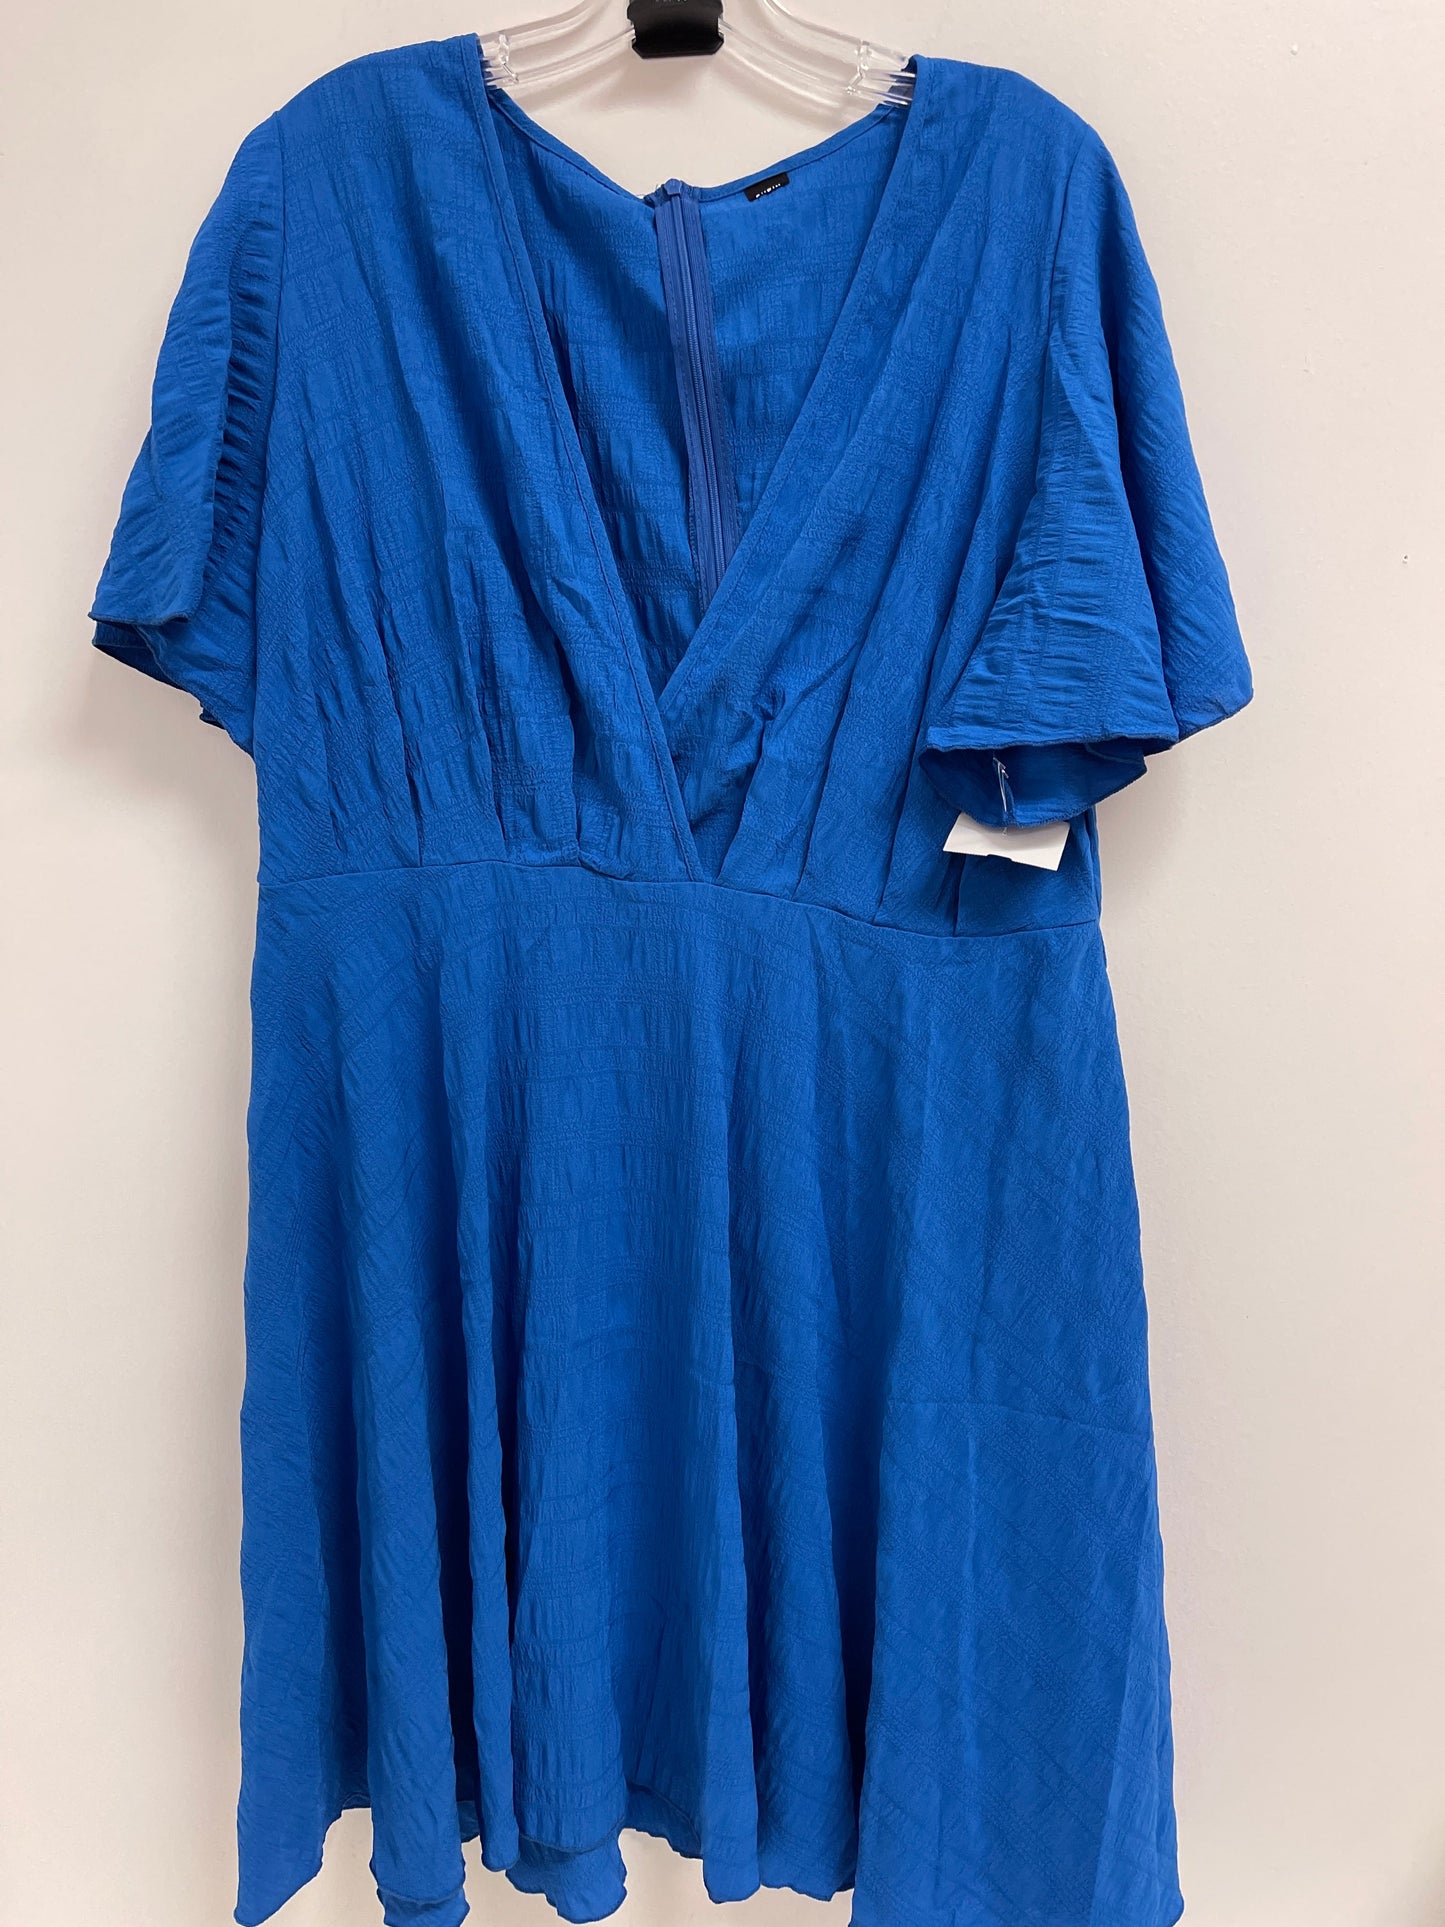 Blue Dress Casual Short Shein, Size 2x